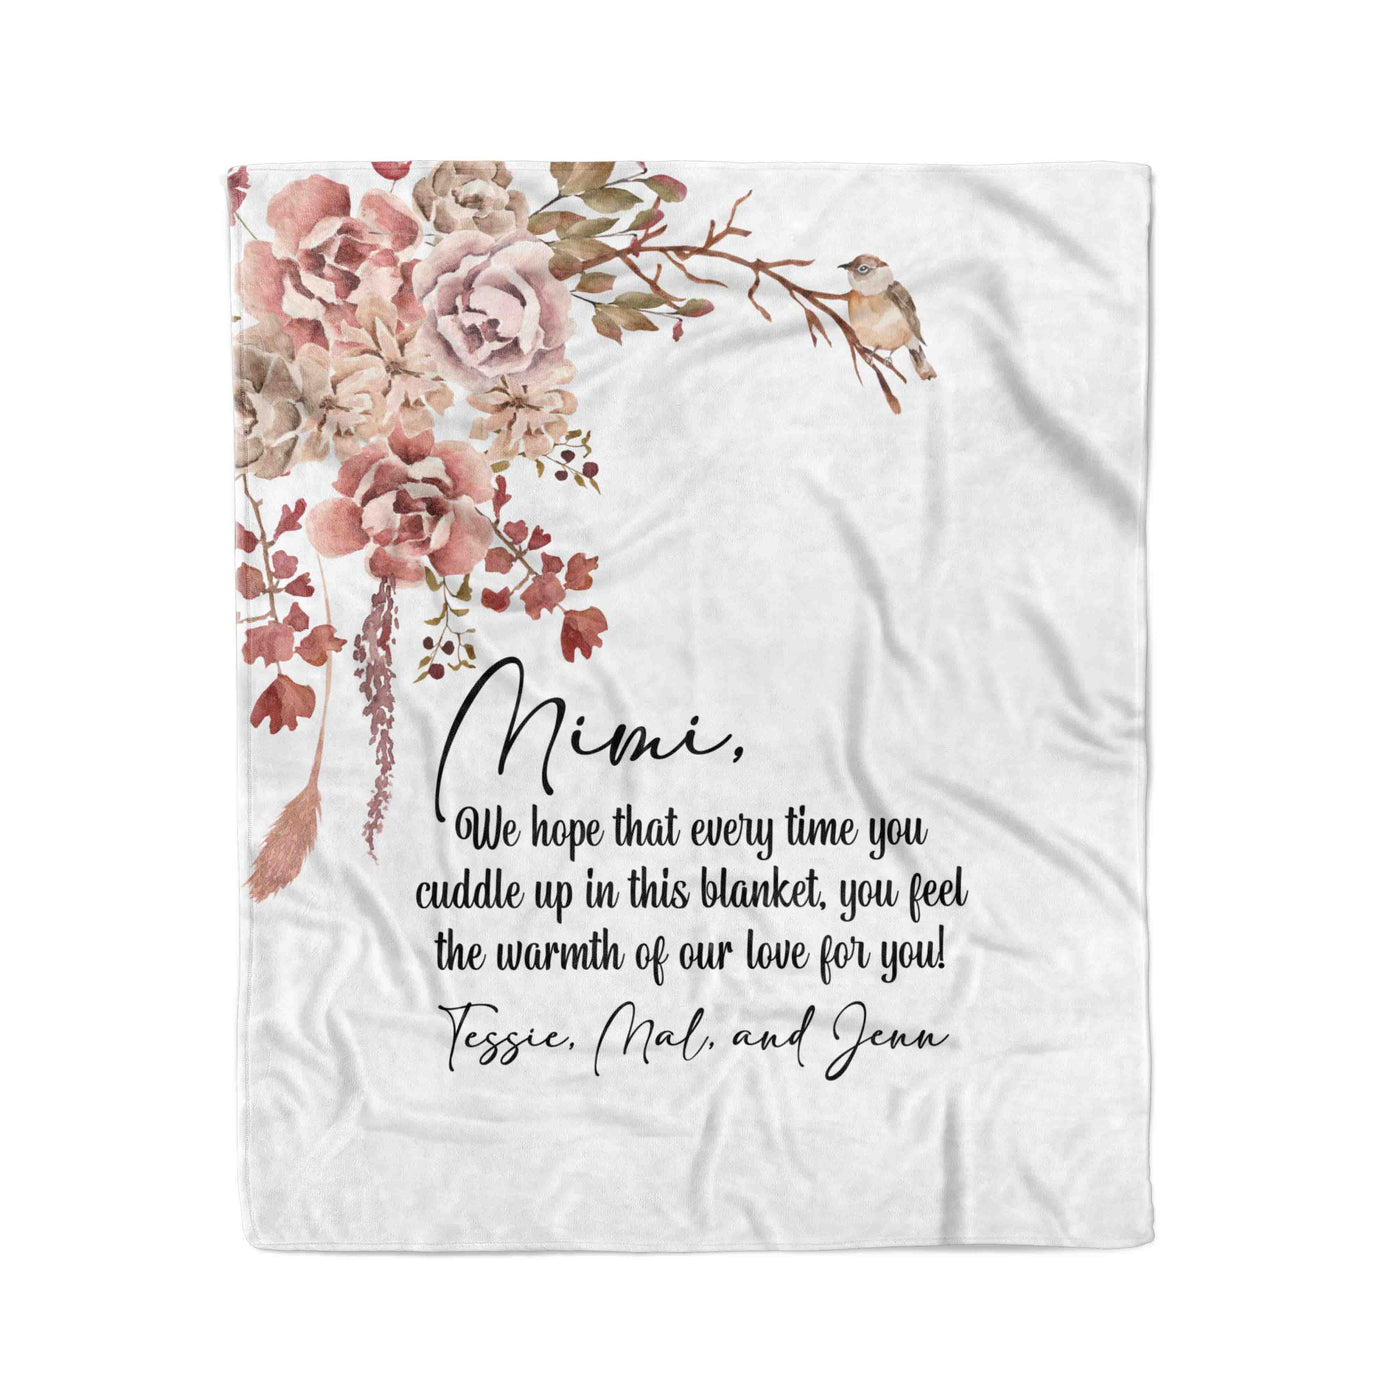 Personalized Blanket | Warm Note To Grandma